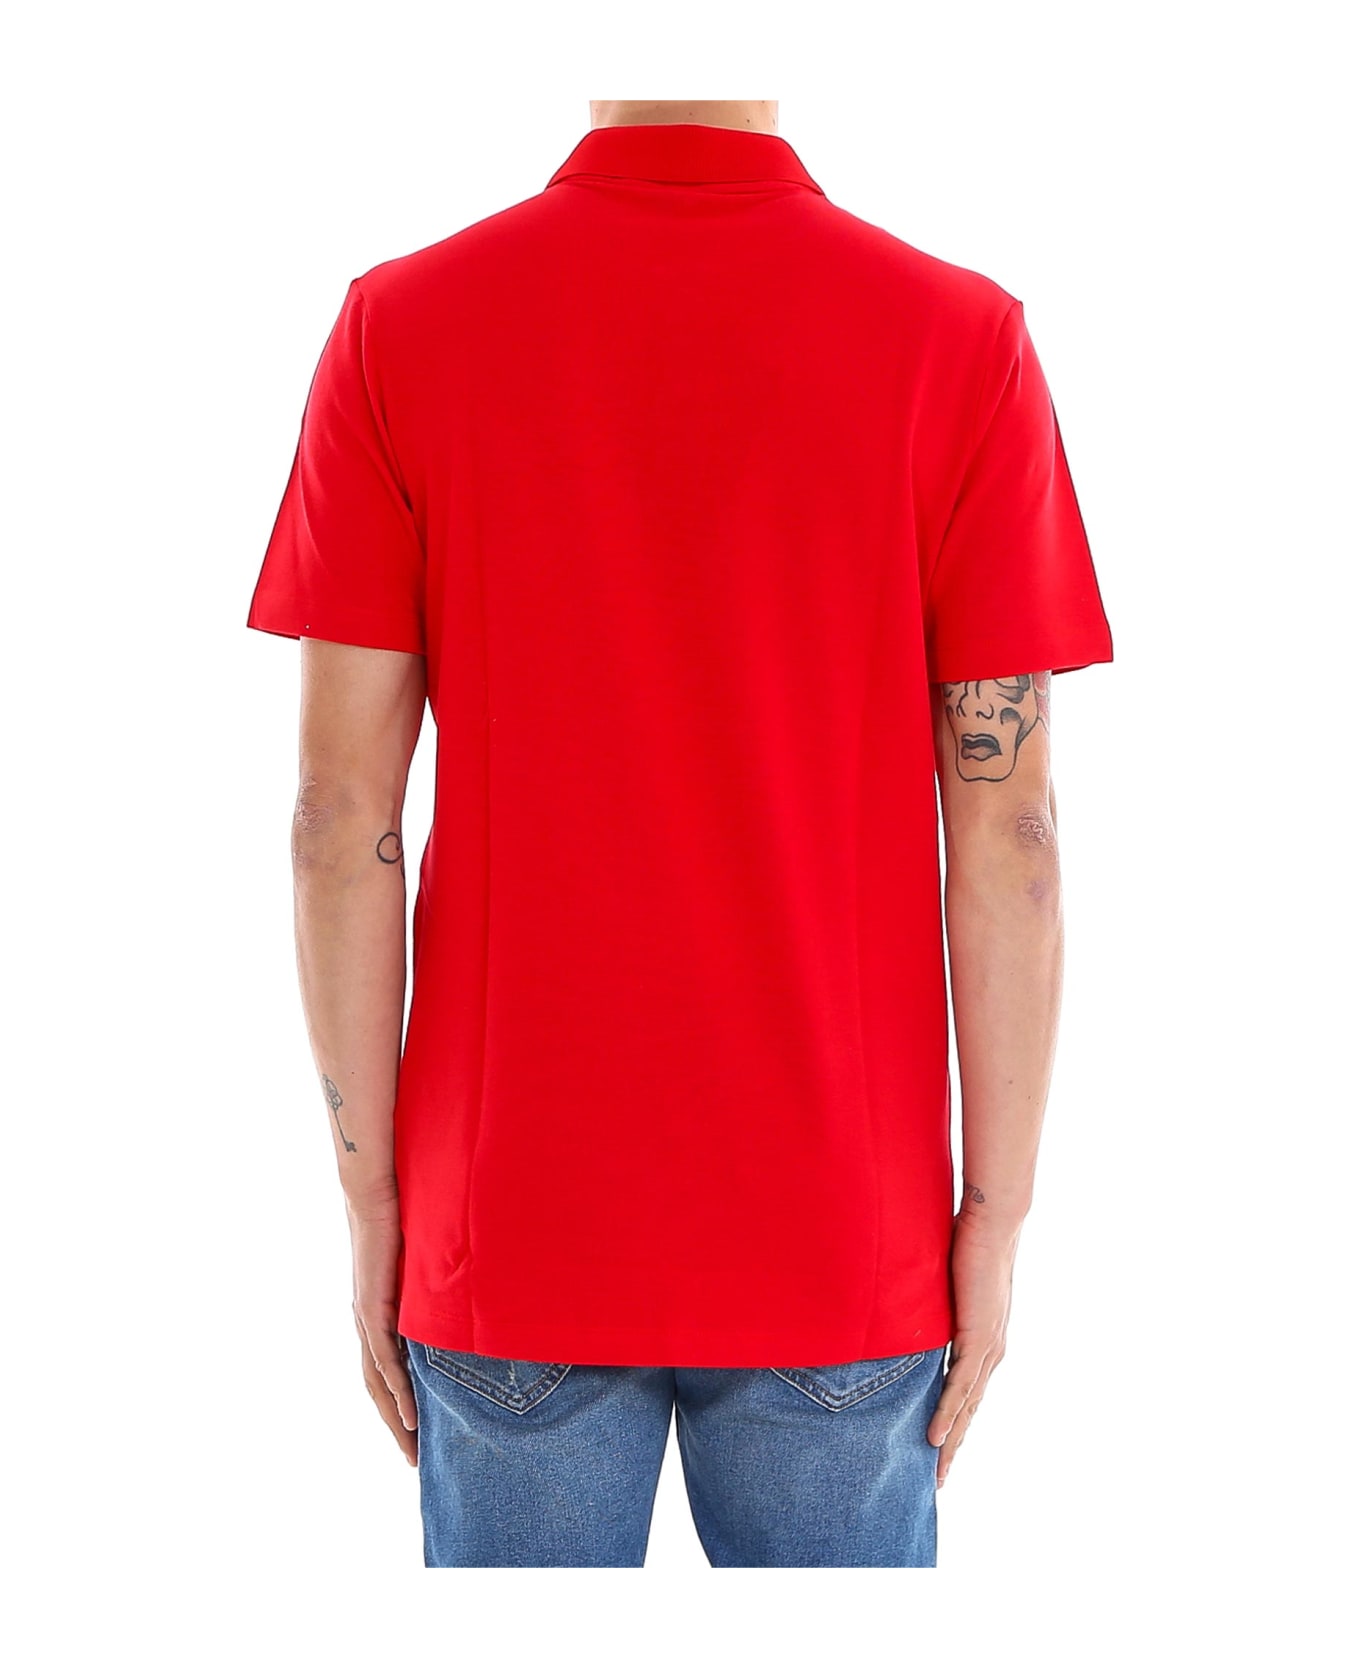 Paul&Shark Polo Shirt - RED ポロシャツ